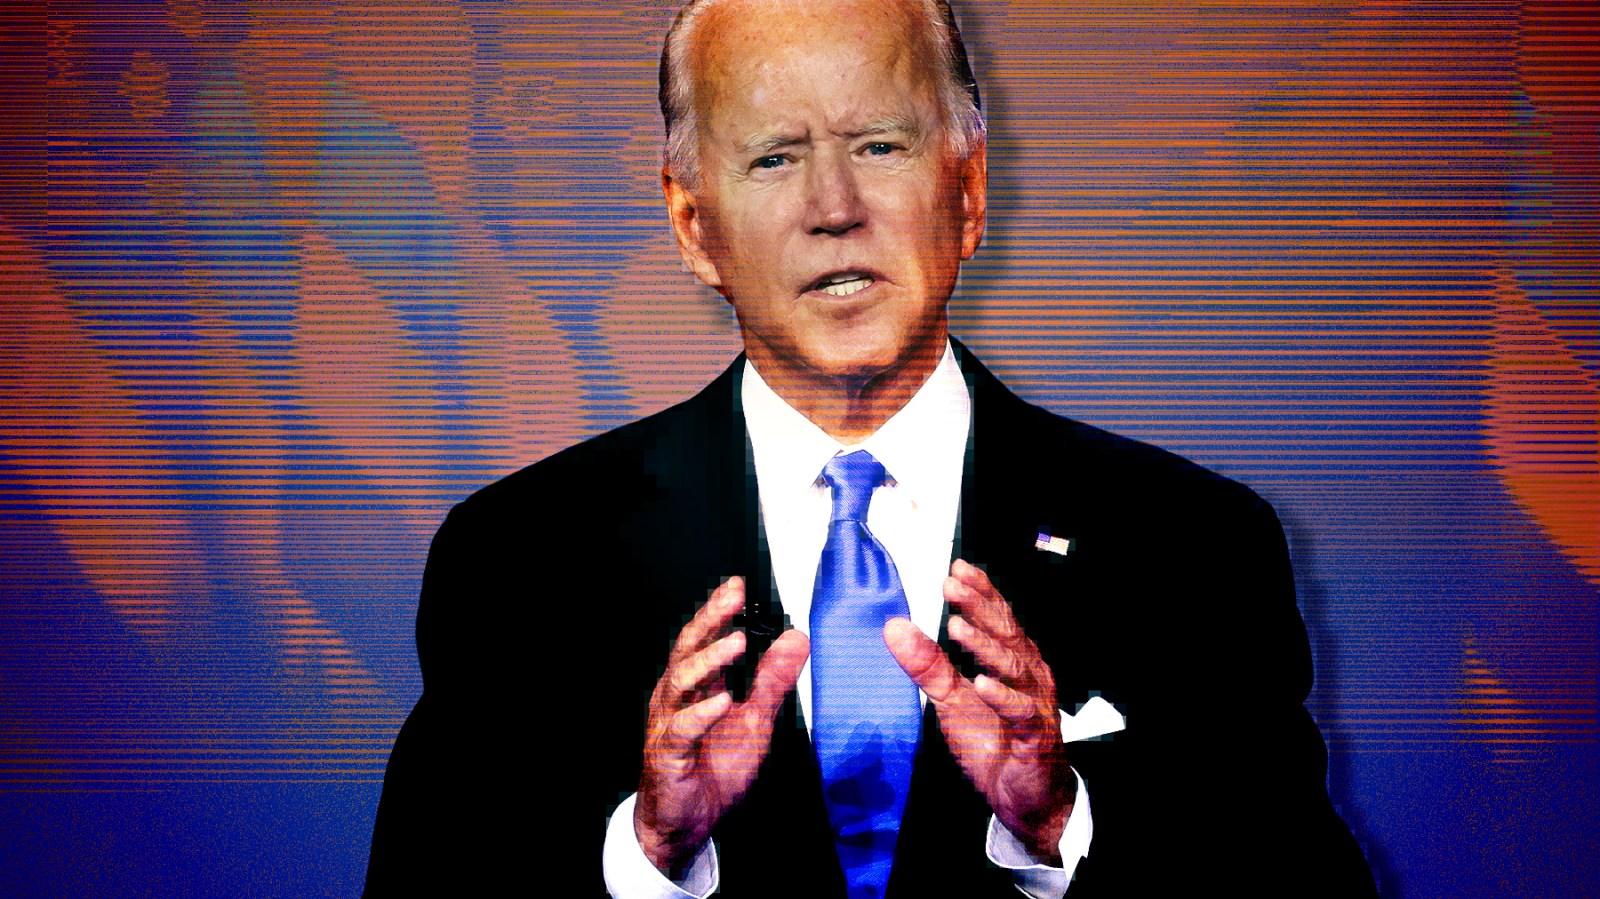 Joe Biden Voice Used For Fake Ai Speeches